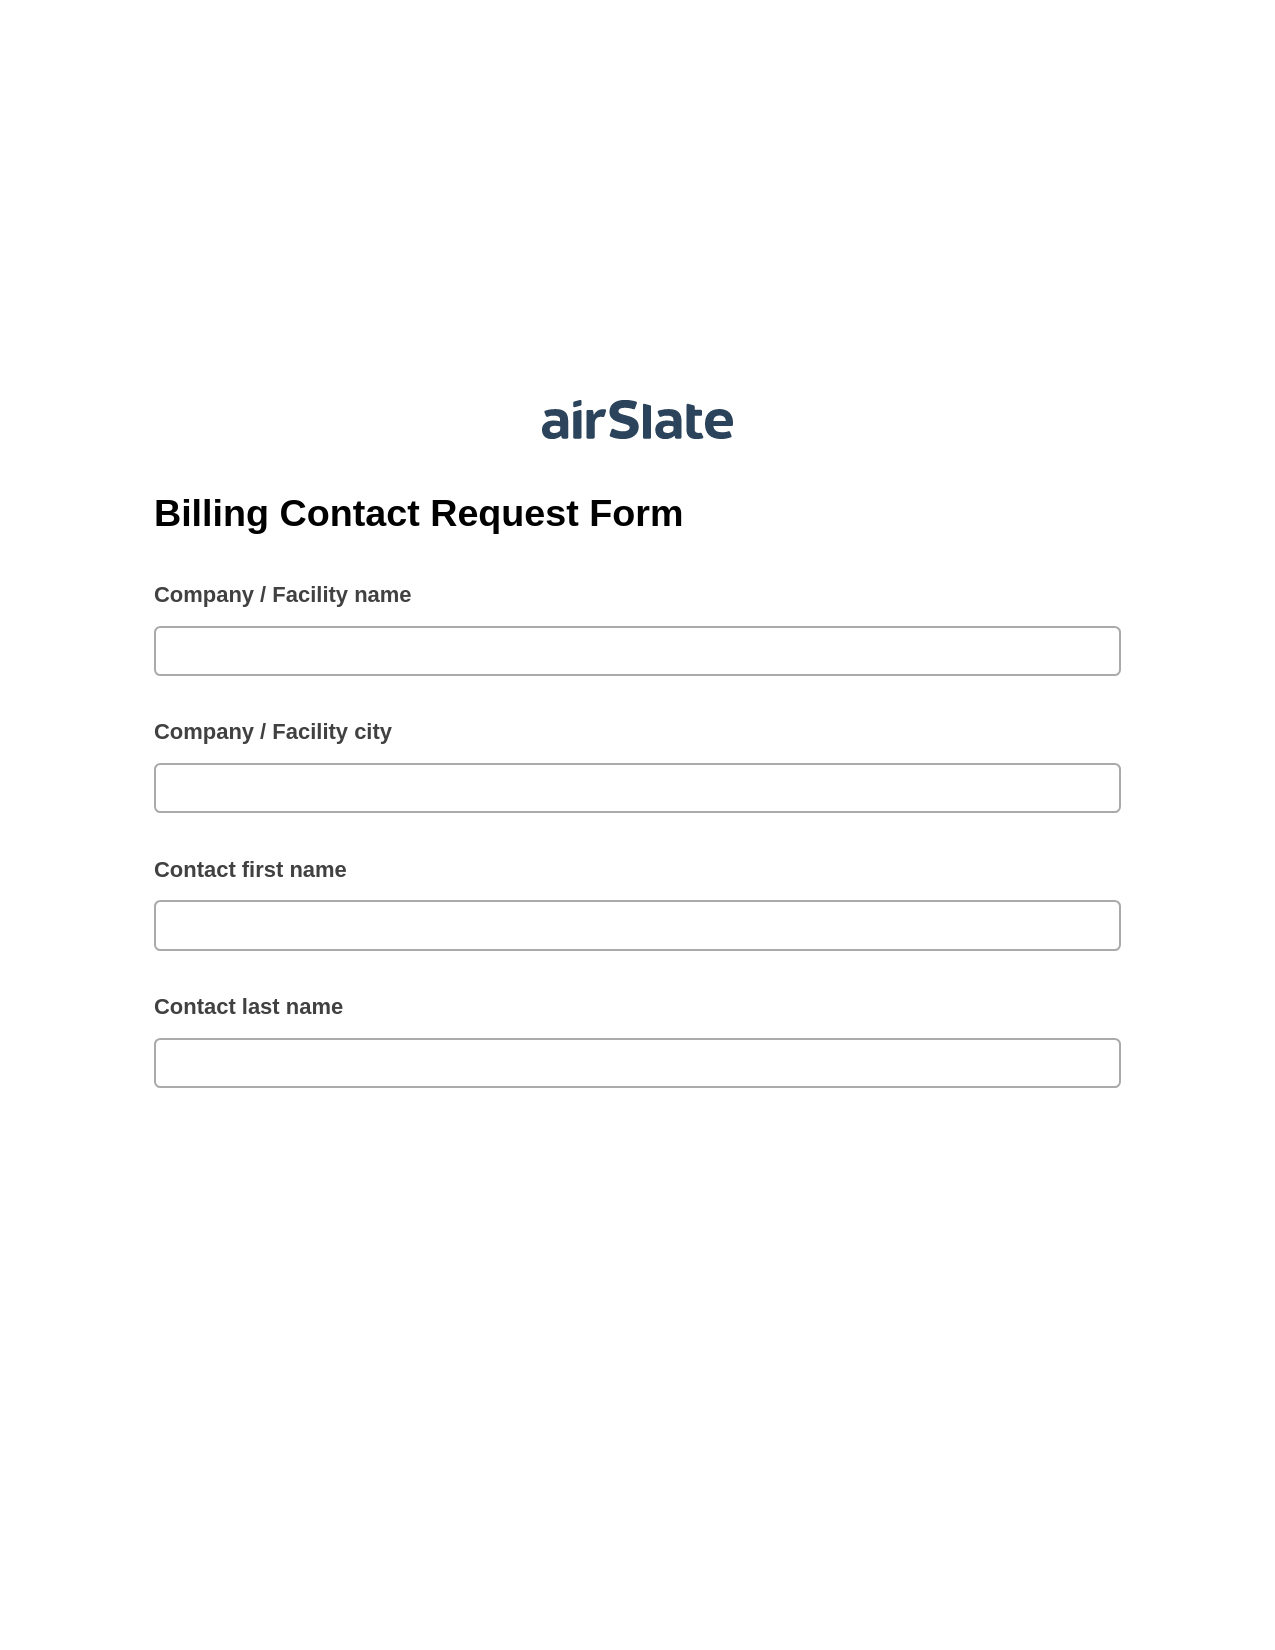 Multirole Billing Contact Request Form Pre-fill from Smartsheet Bot, SendGrid send Campaign bot, Export to Smartsheet